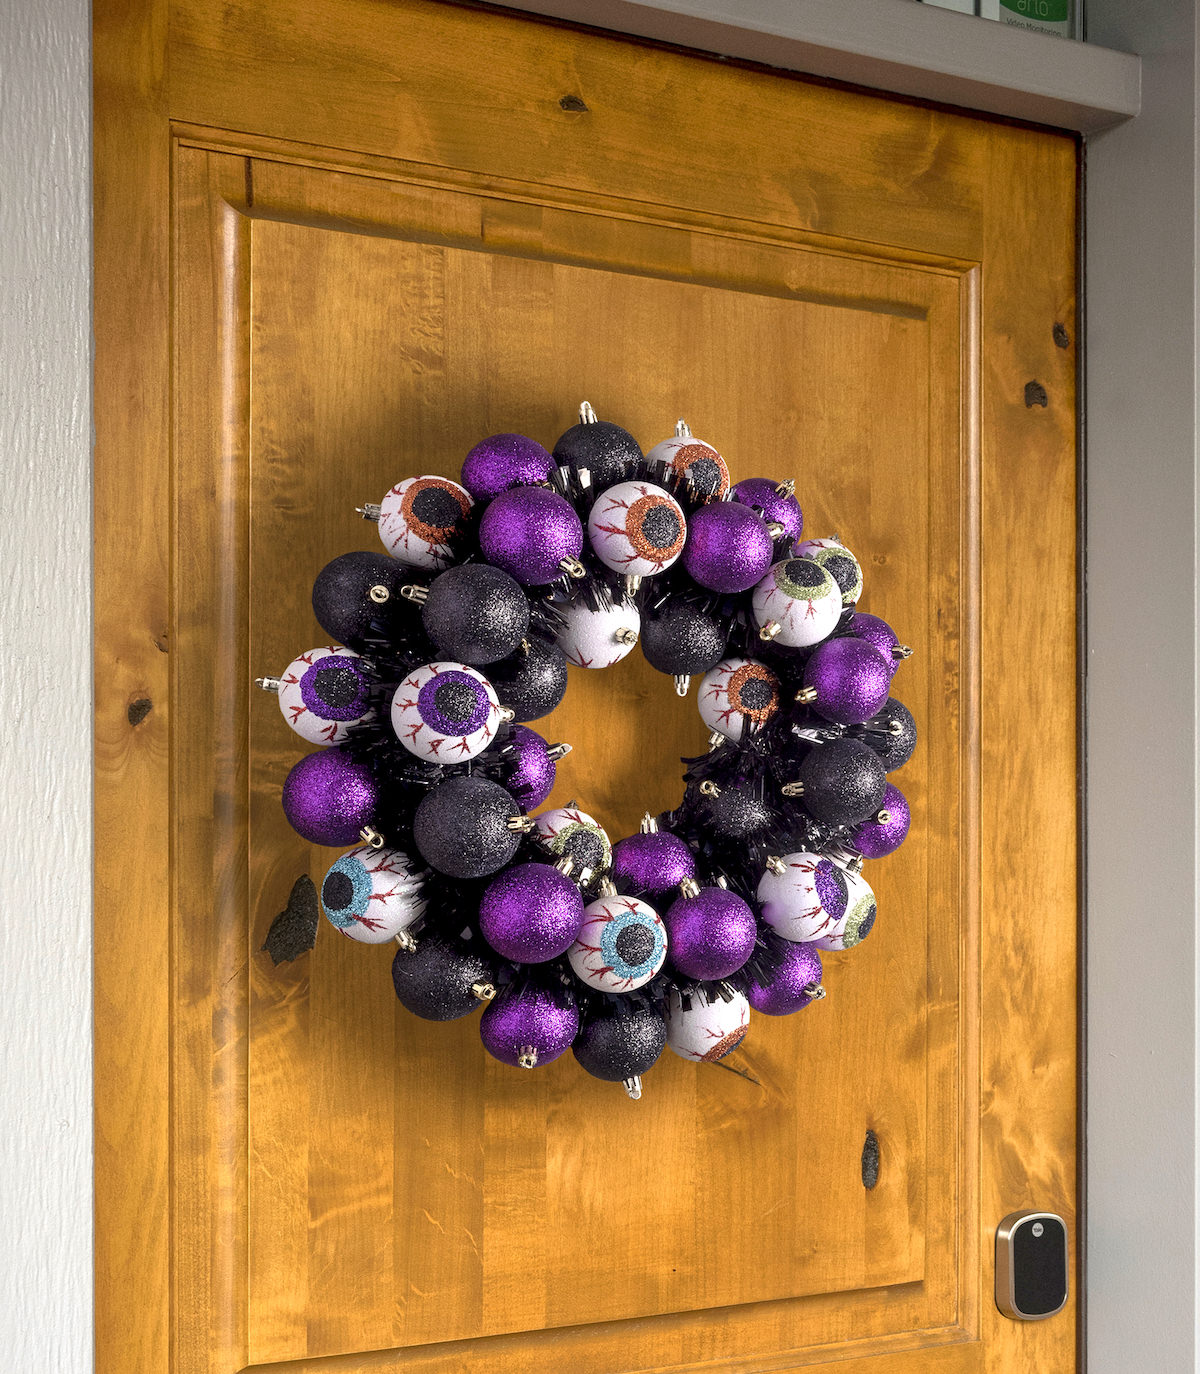 Make a Halloween ornament wreath